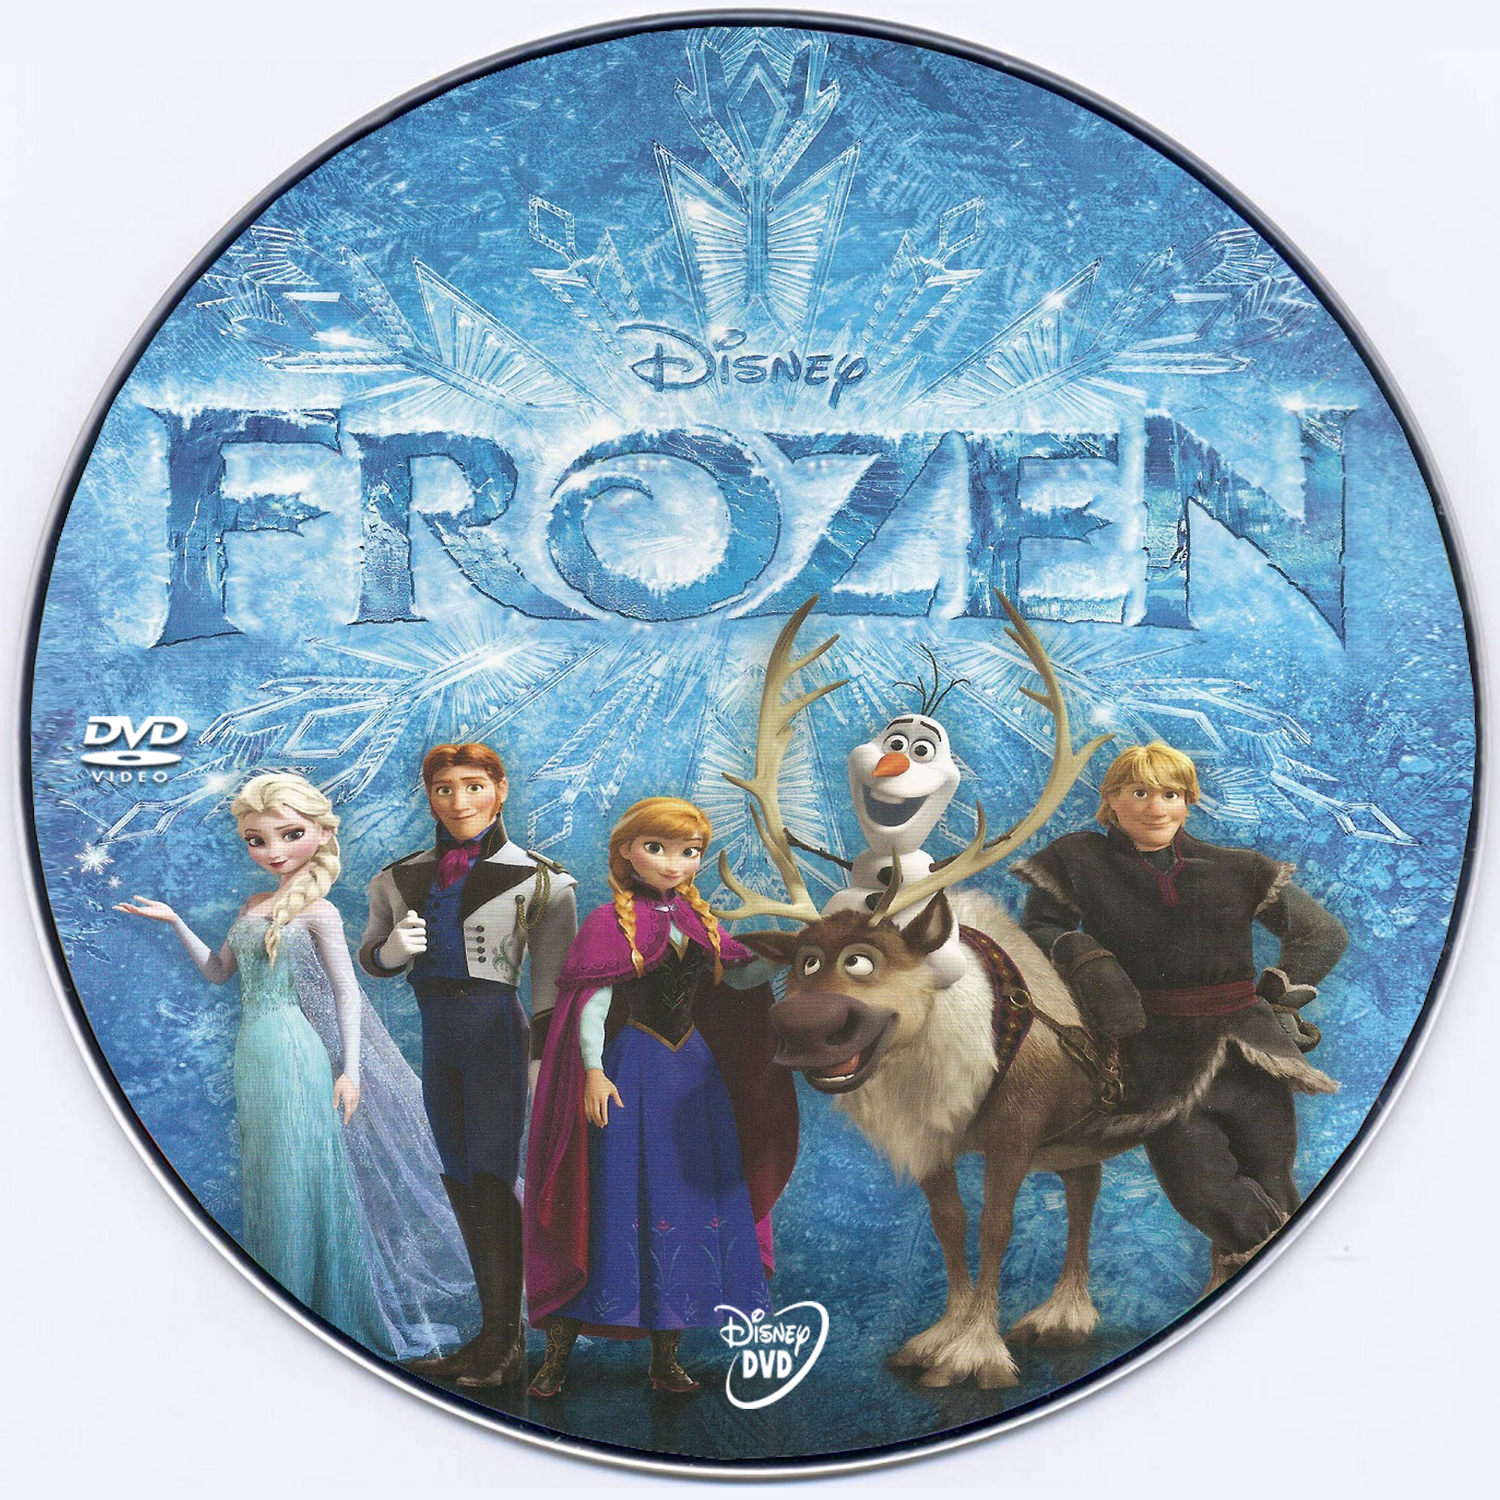  disney frozen cd  DVD Covers Cover Century Over 500 